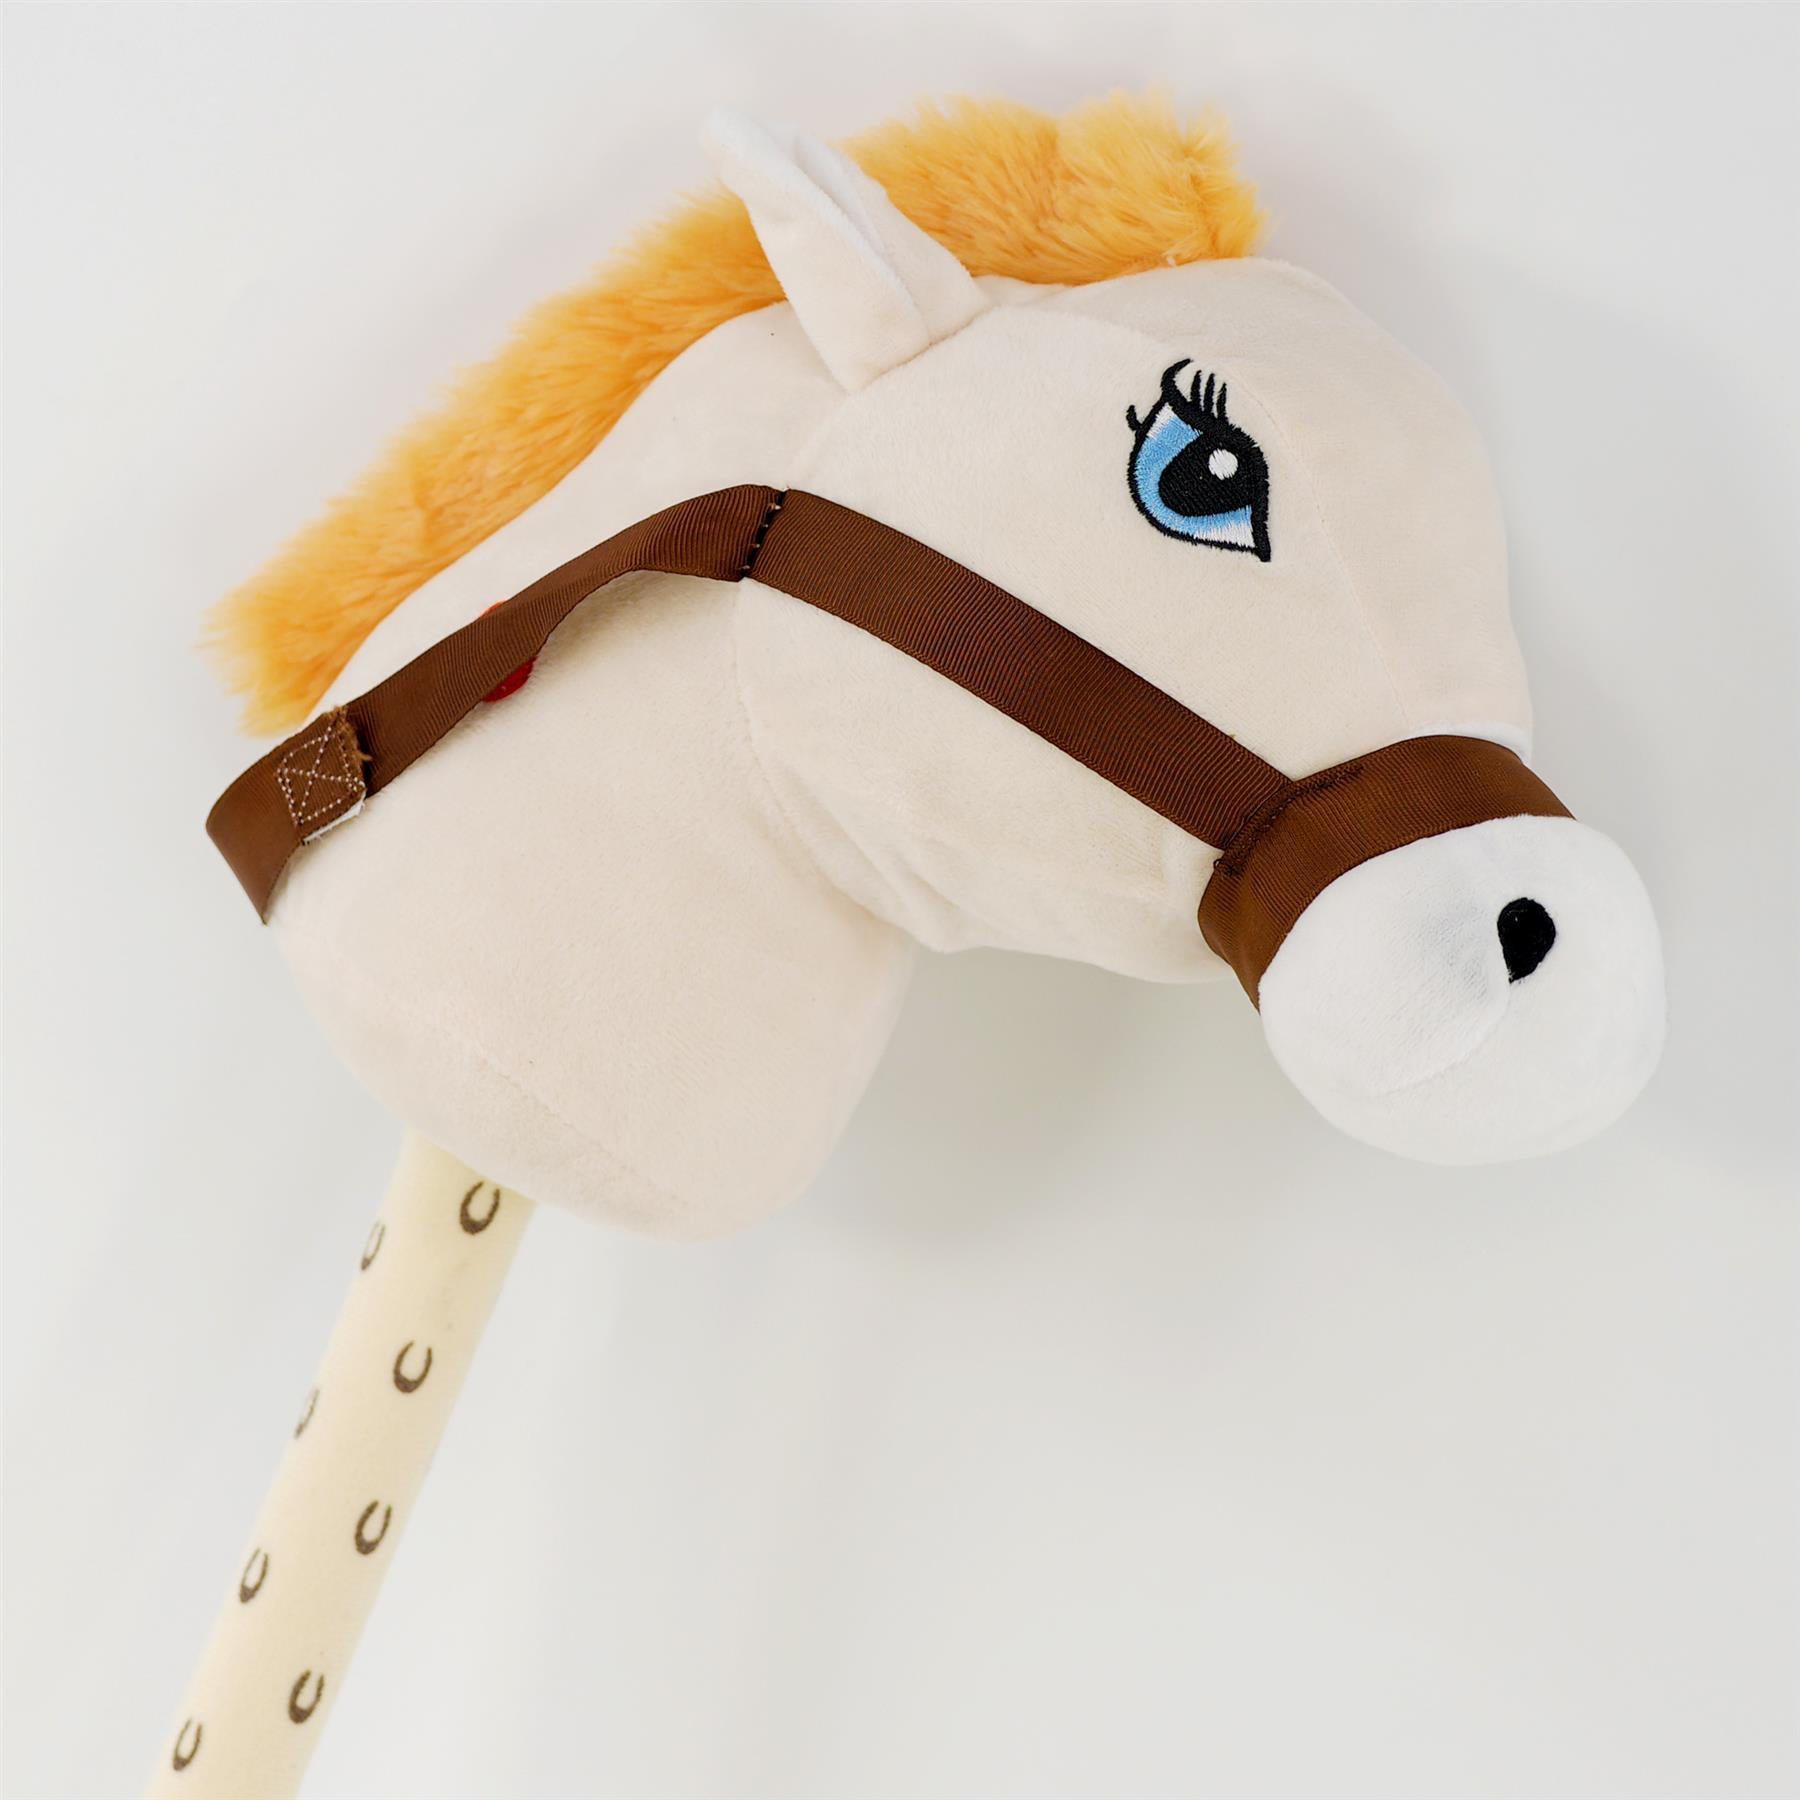 Cream Hobby Horse by The Magic Toy Shop - UKBuyZone